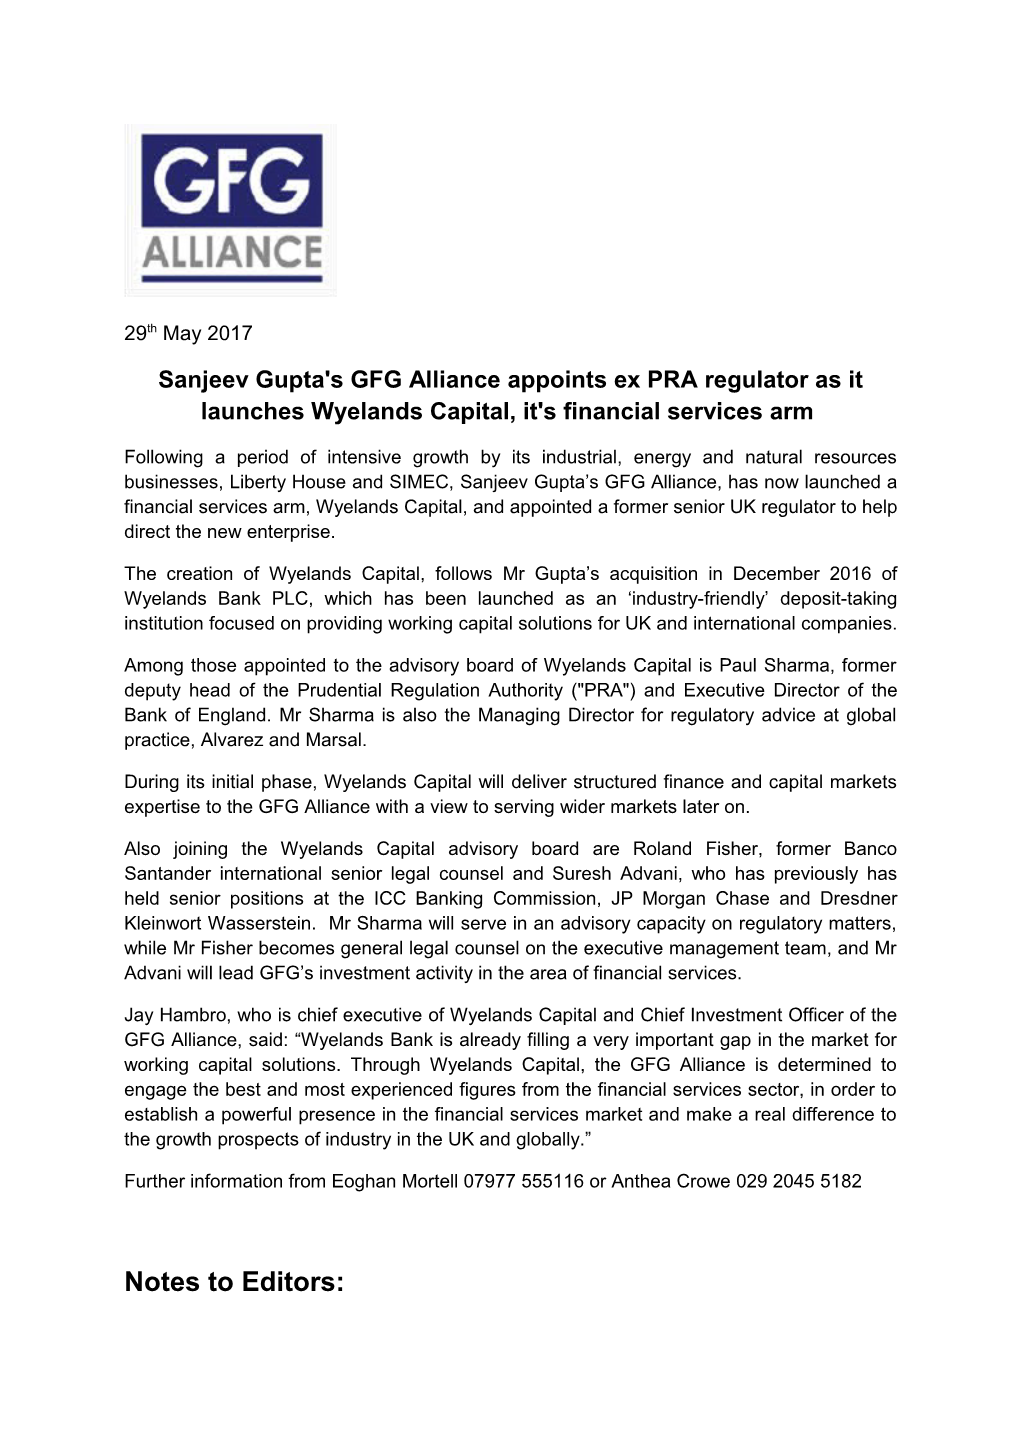 Sanjeev Gupta's GFG Alliance Appoints Ex PRA Regulator As It Launches Wyelands Capital